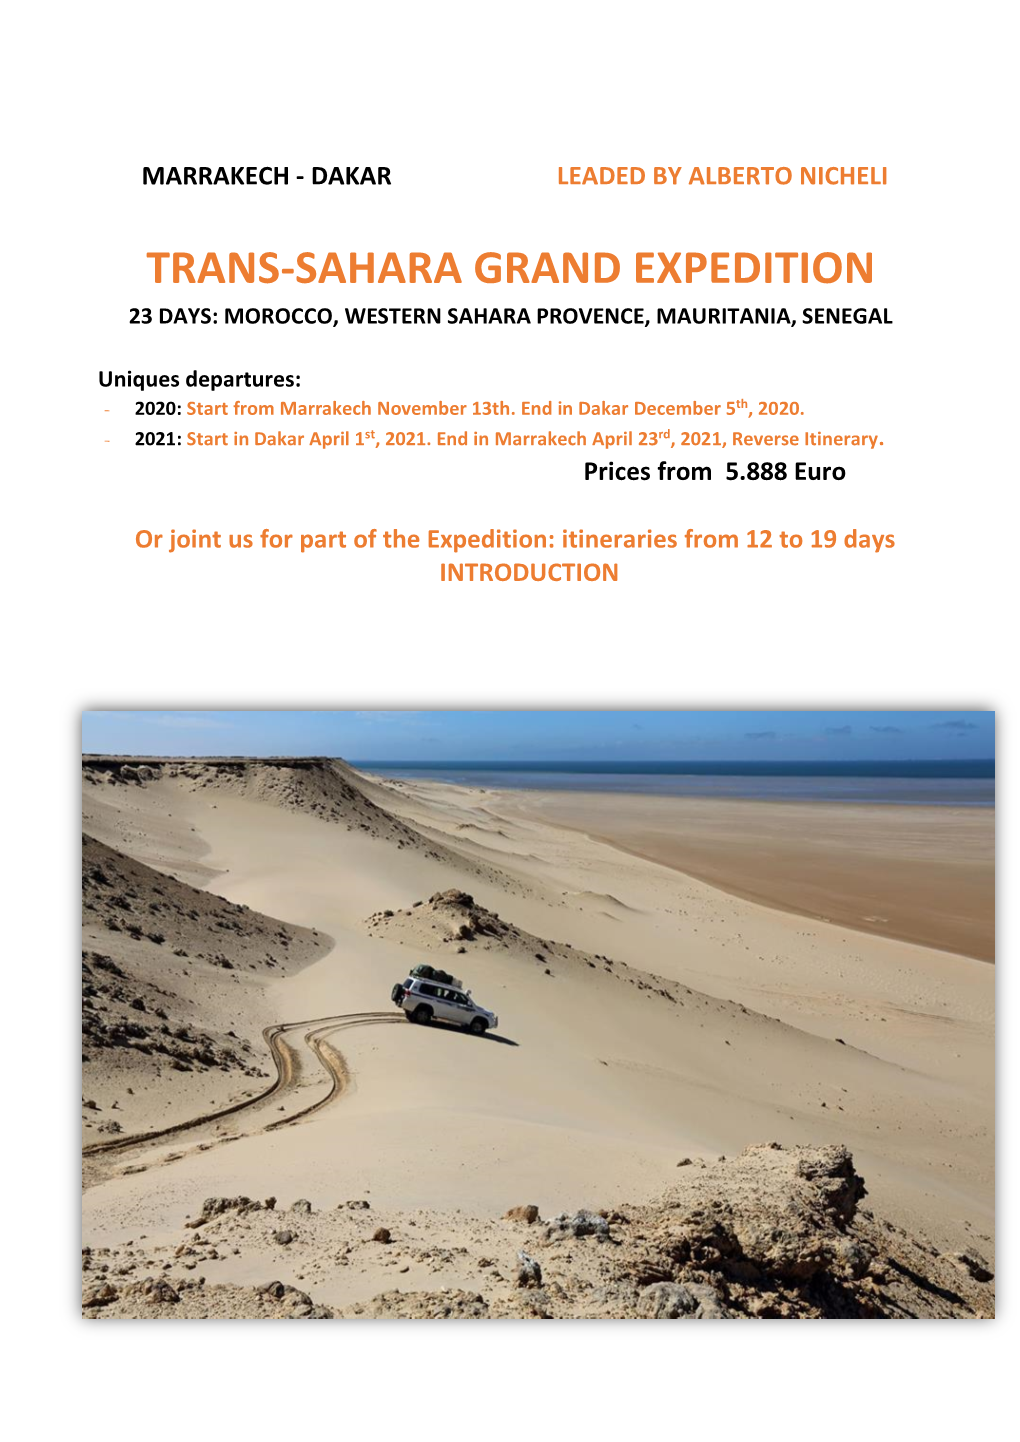 Trans-Sahara Grand Expedition 23 Days: Morocco, Western Sahara Provence, Mauritania, Senegal